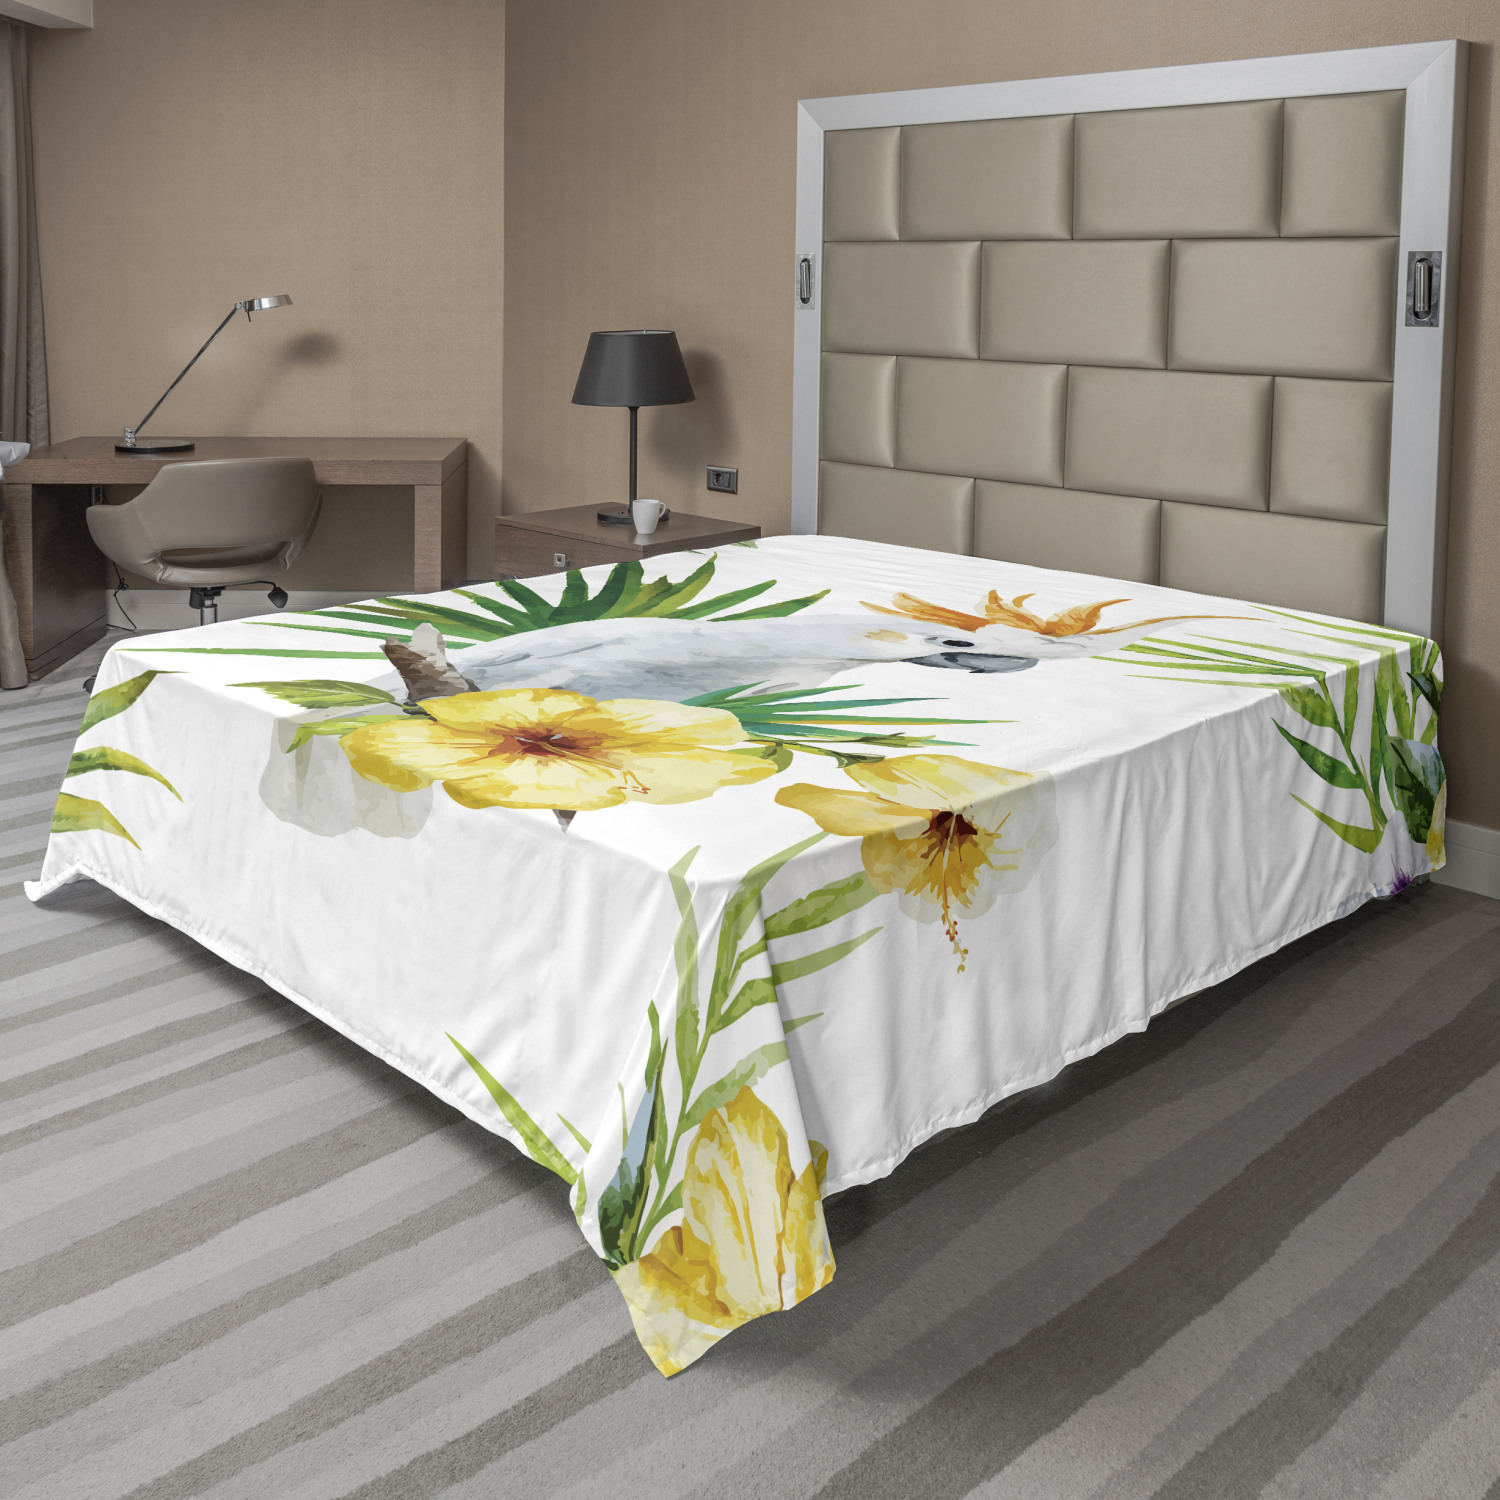 Details about   Ambesonne Ladybug Print Flat Sheet Top Sheet Decorative Bedding 6 Sizes 